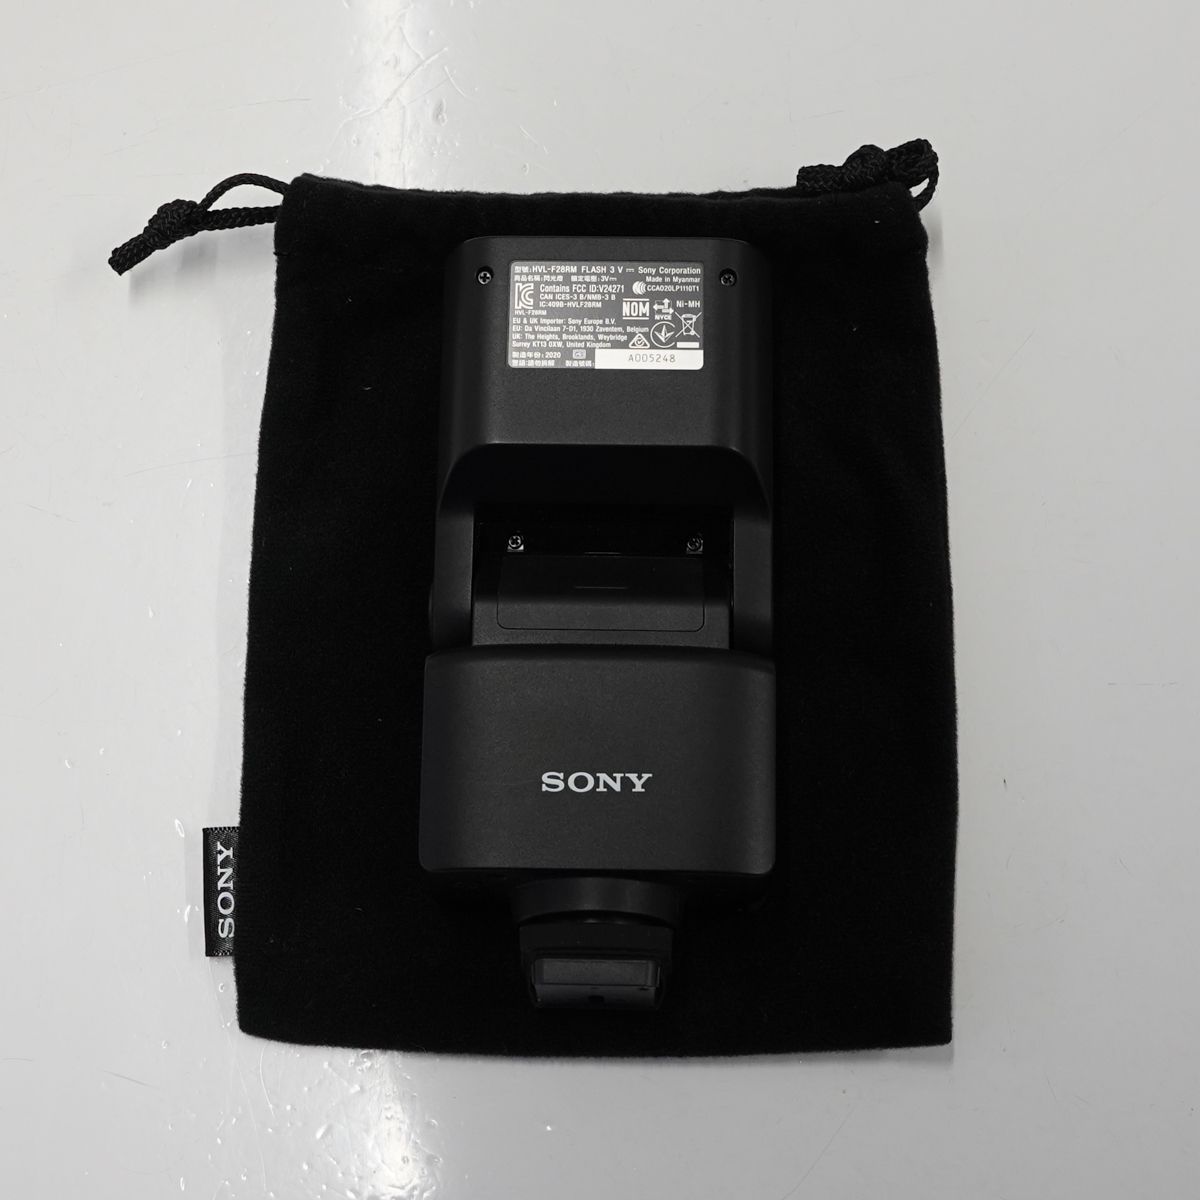 SONY フラッシュ HVL-F28RM USED超美品 ストロボ 小型 軽量 TTL ガイドナンバー28 電波式ワイヤレス通信対応 完動品 中古  CP2105